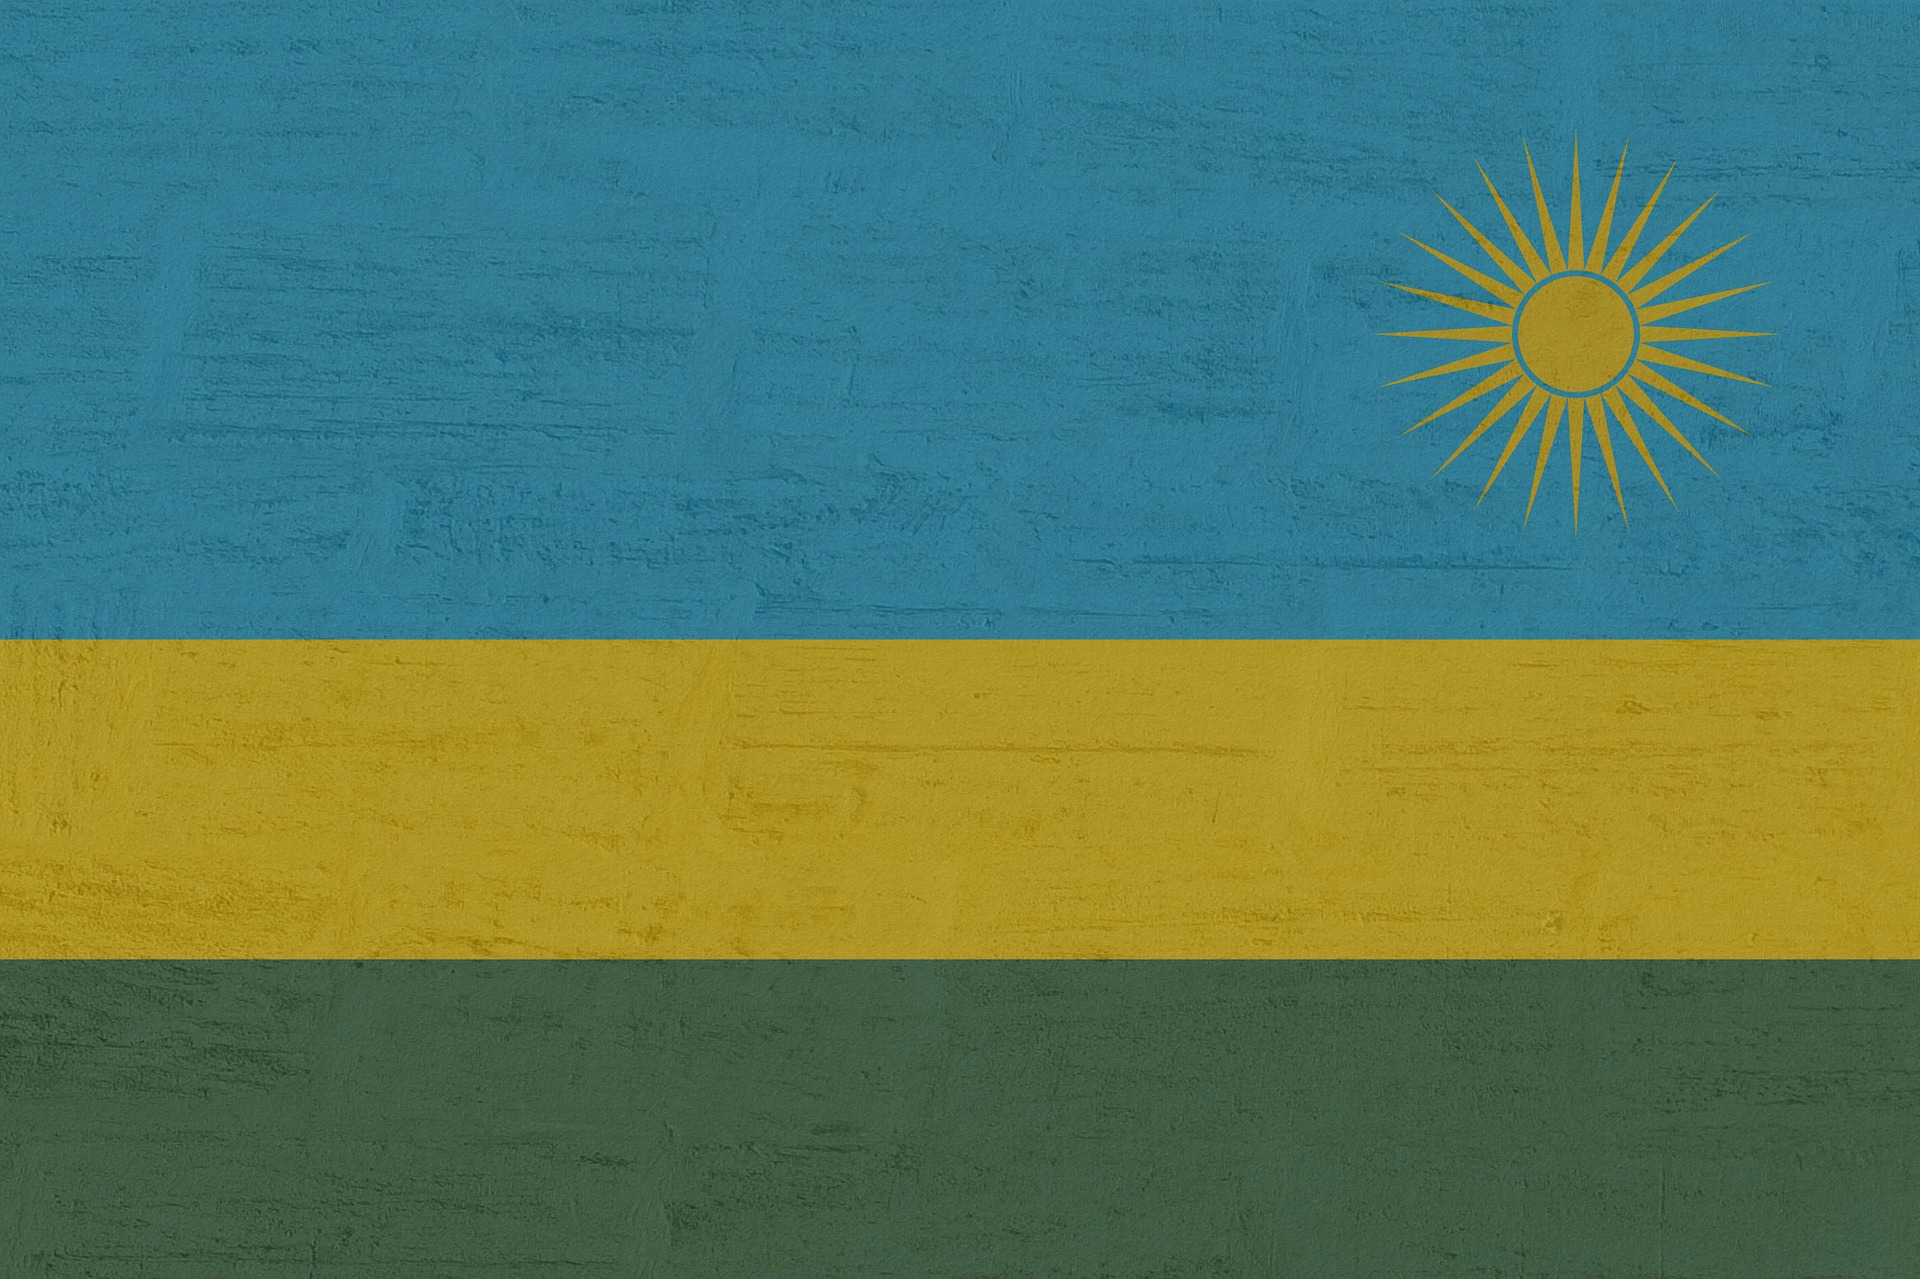 ruanda_flag-2.jpg